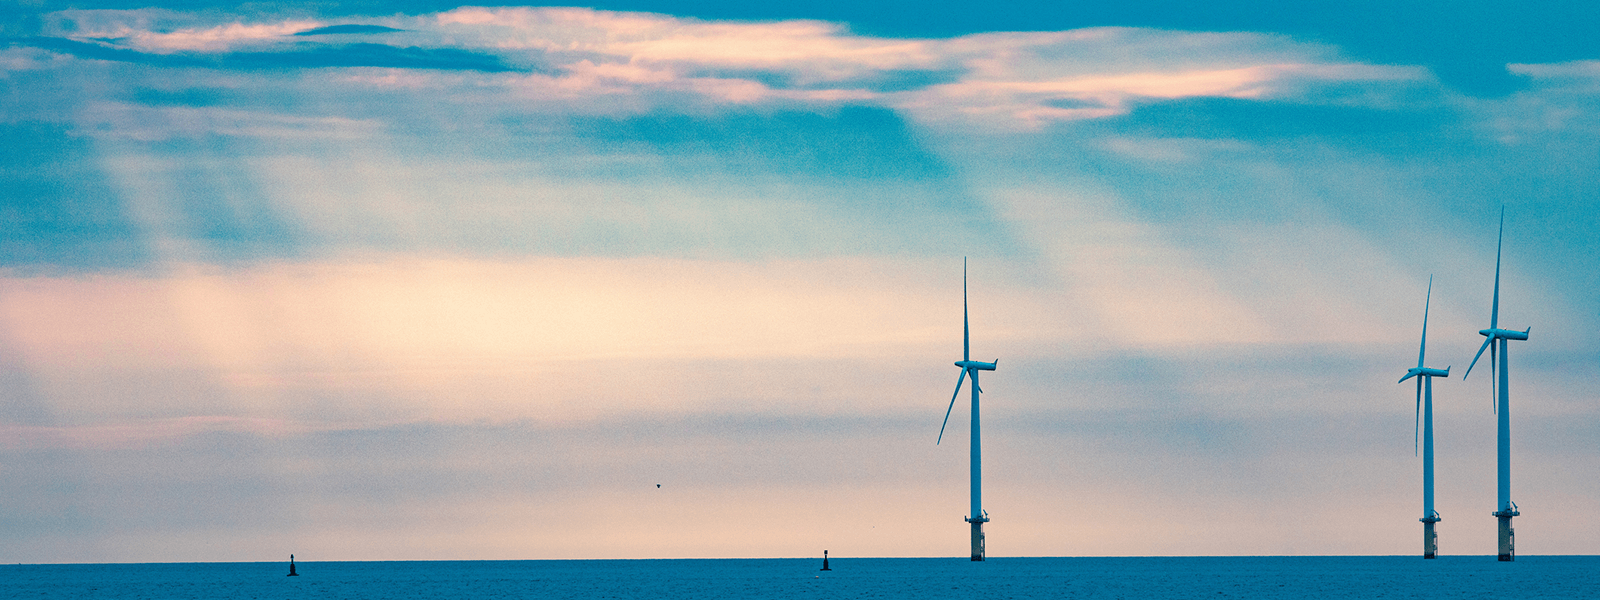 Wind turbines visible on the Irish sea